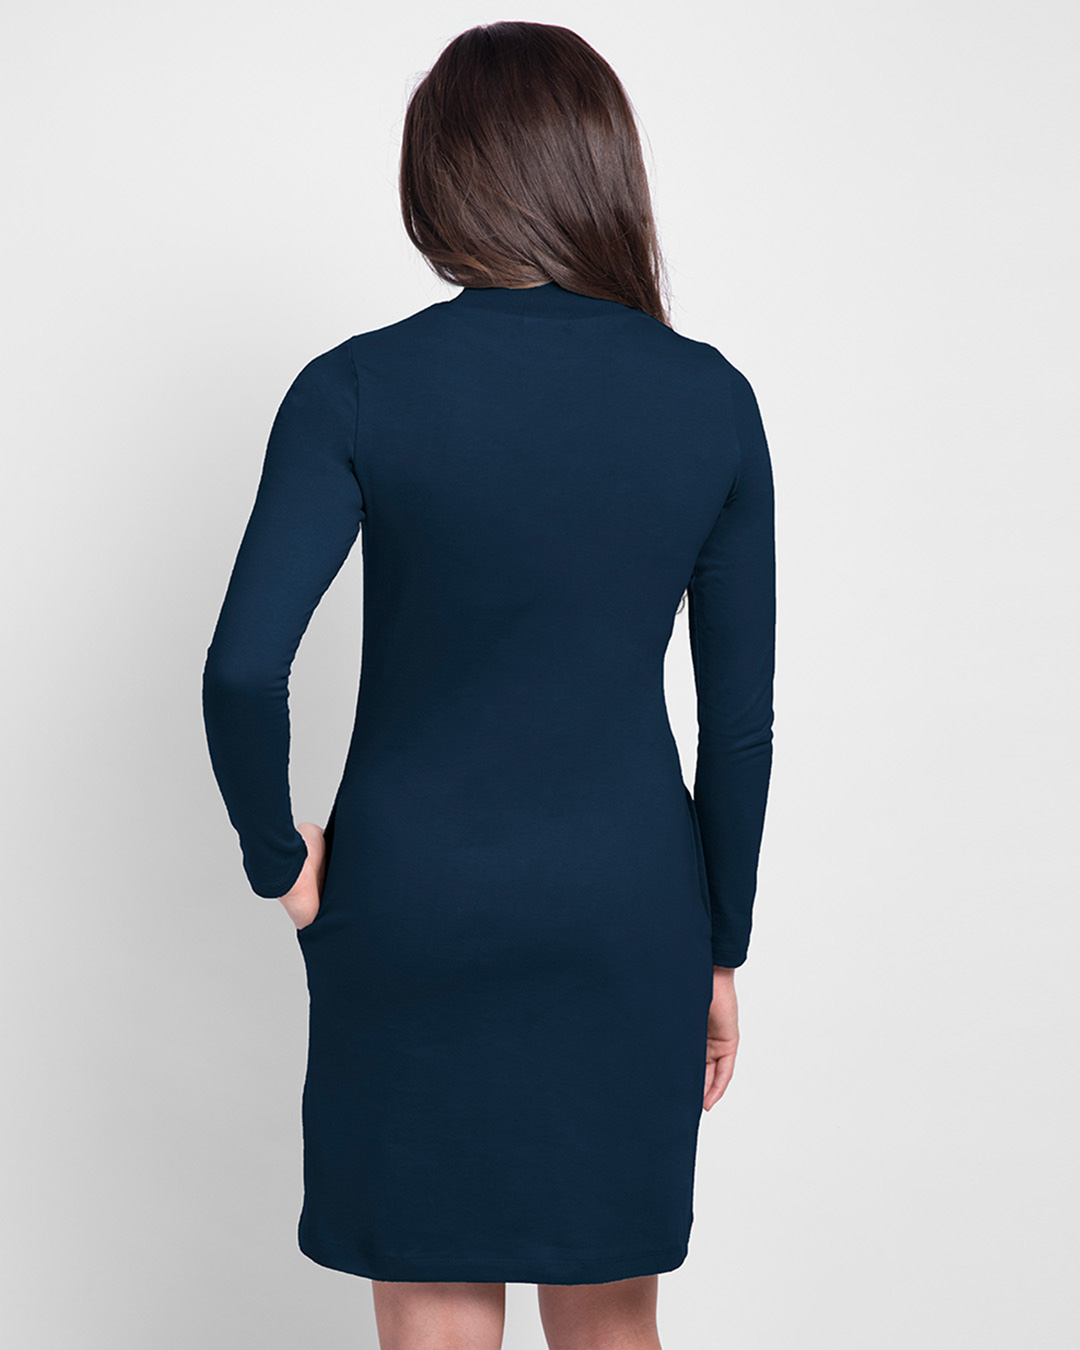 Shop Delete the Drama High Neck Pocket Dress Navy Blue-Back